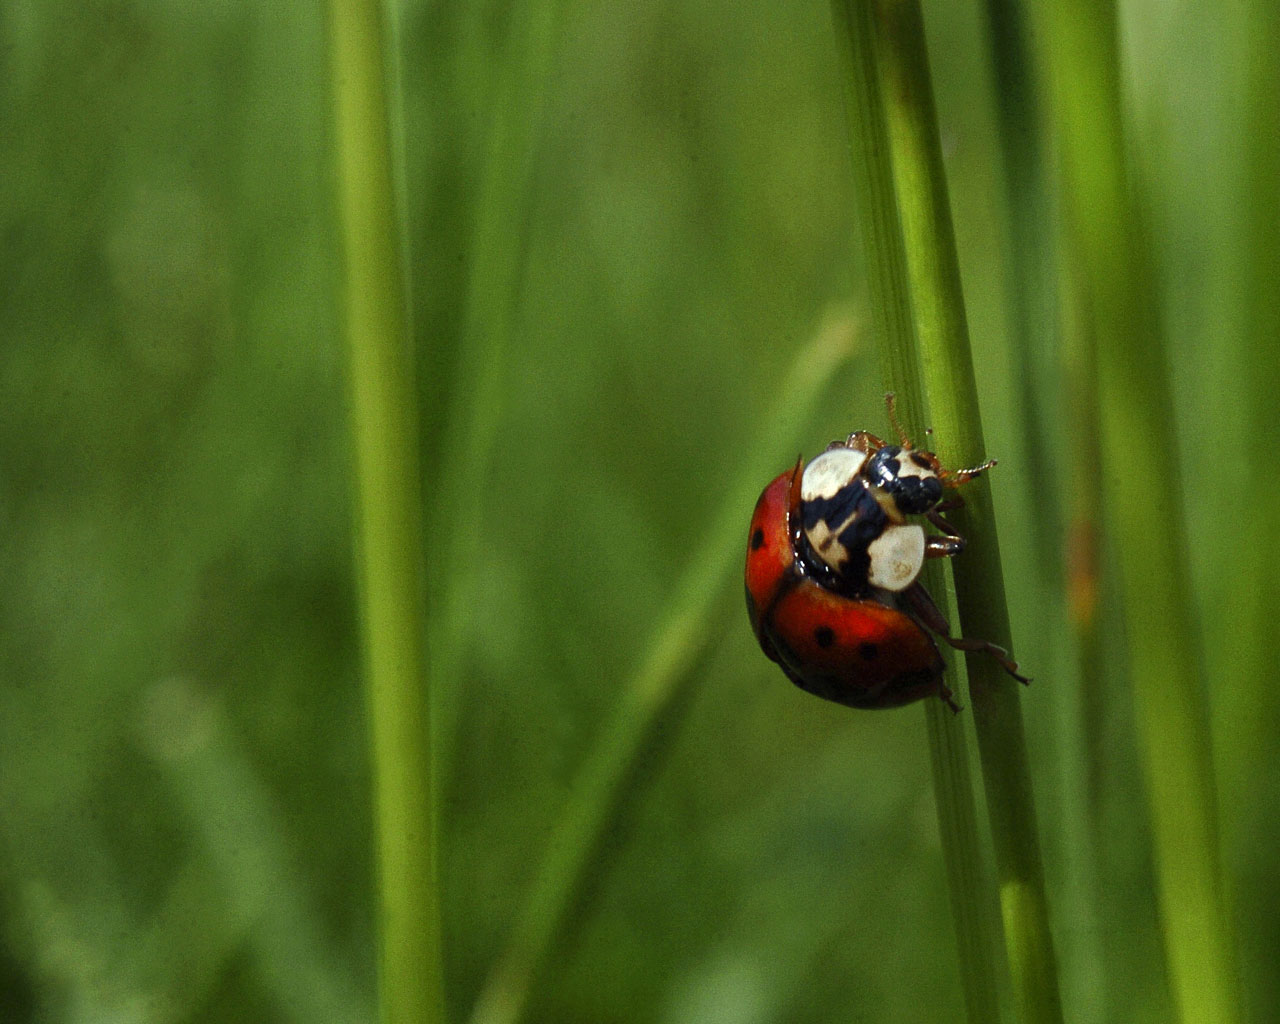 Coccinella septempunctata (ladybug)